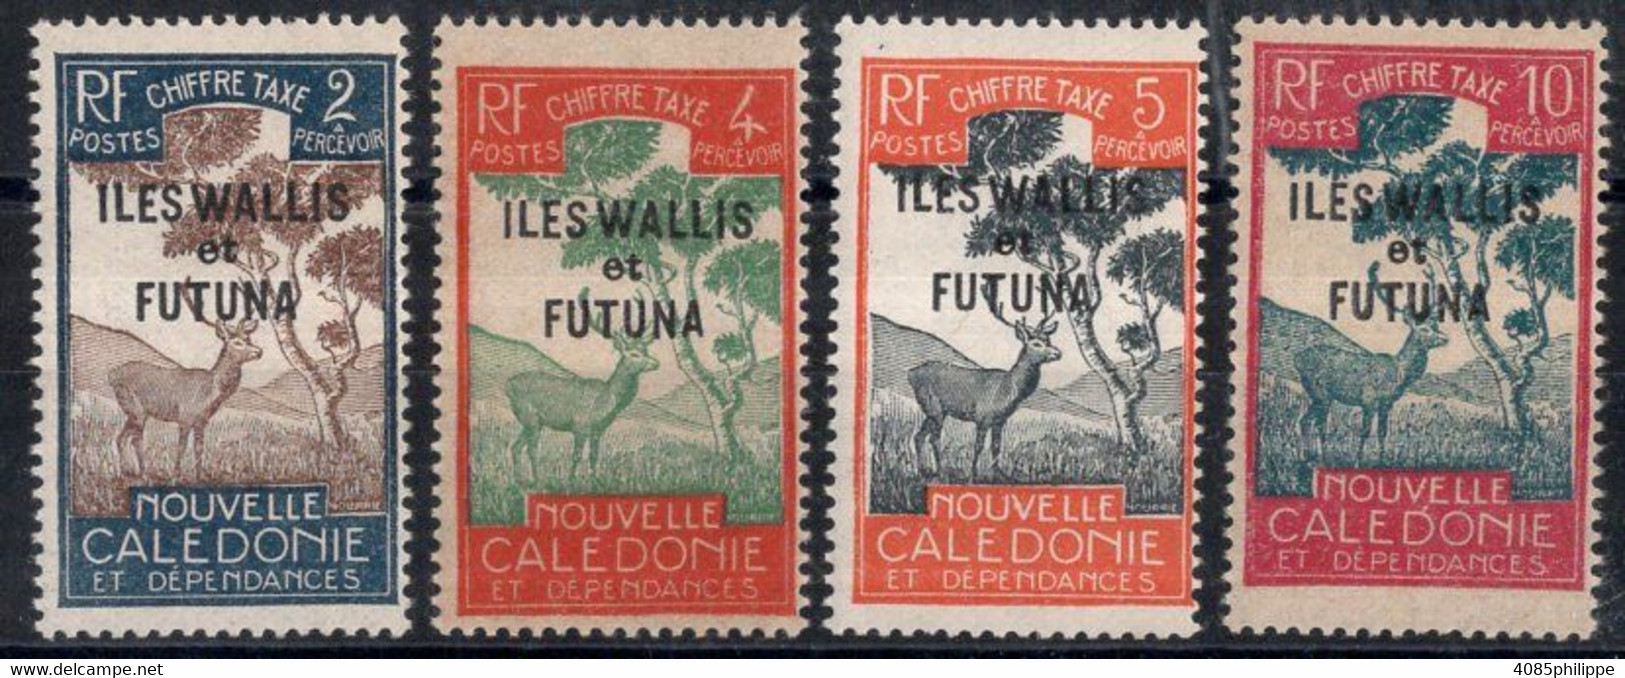 Wallis & Futuna Timbres-Taxe N°11 à 14** Neufs Sans Charnières TB Cote 3.50€ - Postage Due